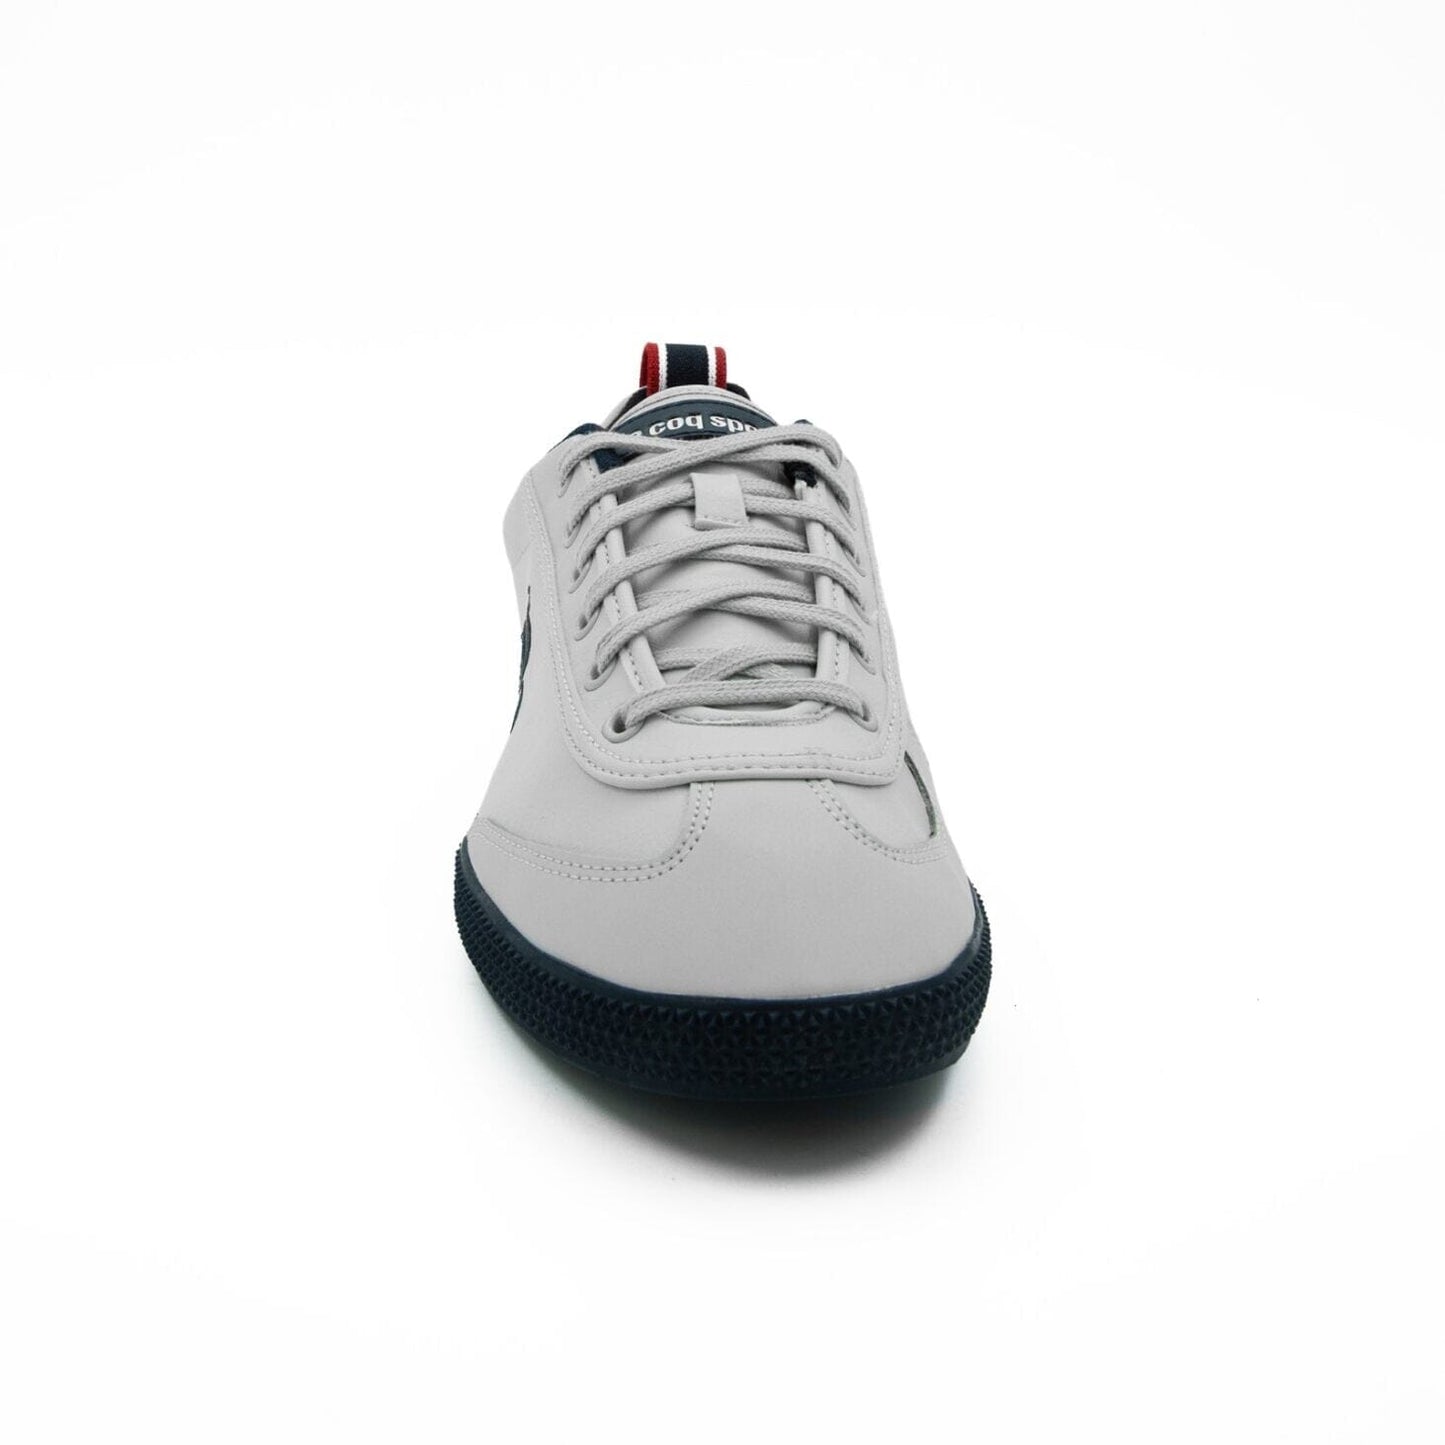 Unisex Provencale PU Marshmal/Black Sneakers